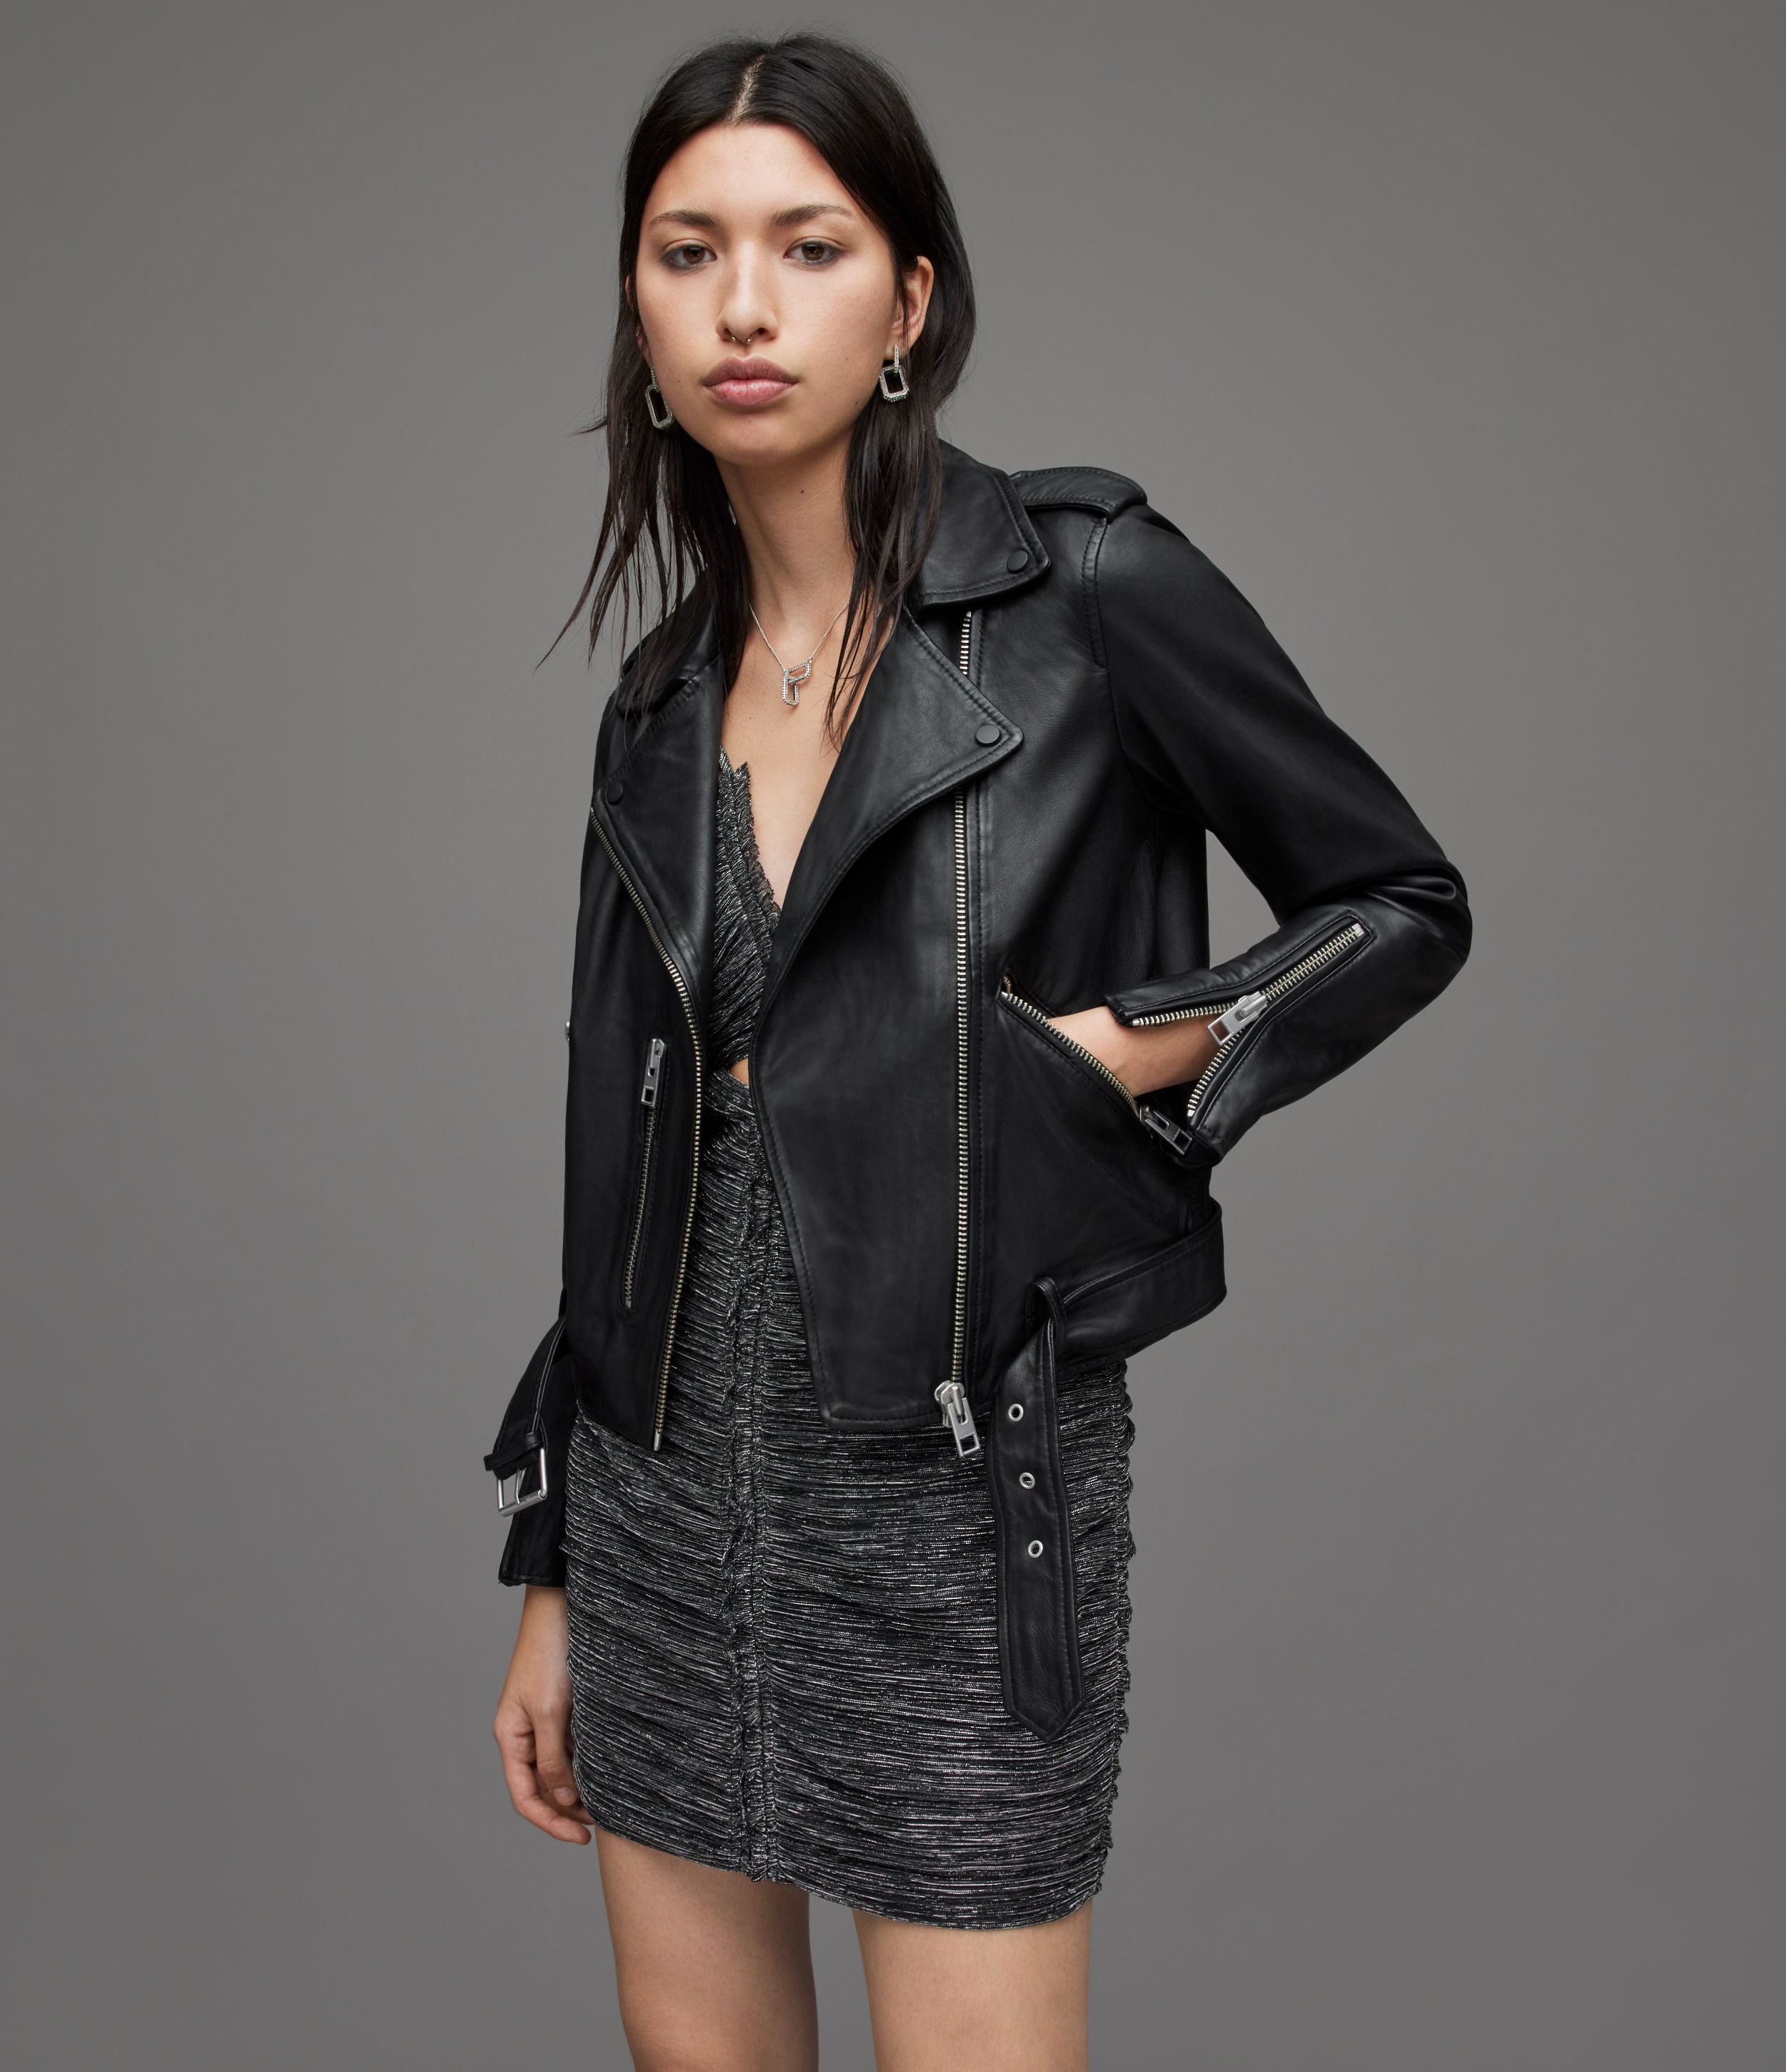 AllSaints Women's Slim Fit Balfern Leather Biker Jacket, Black, Size: UK 10/US 6 | AllSaints US